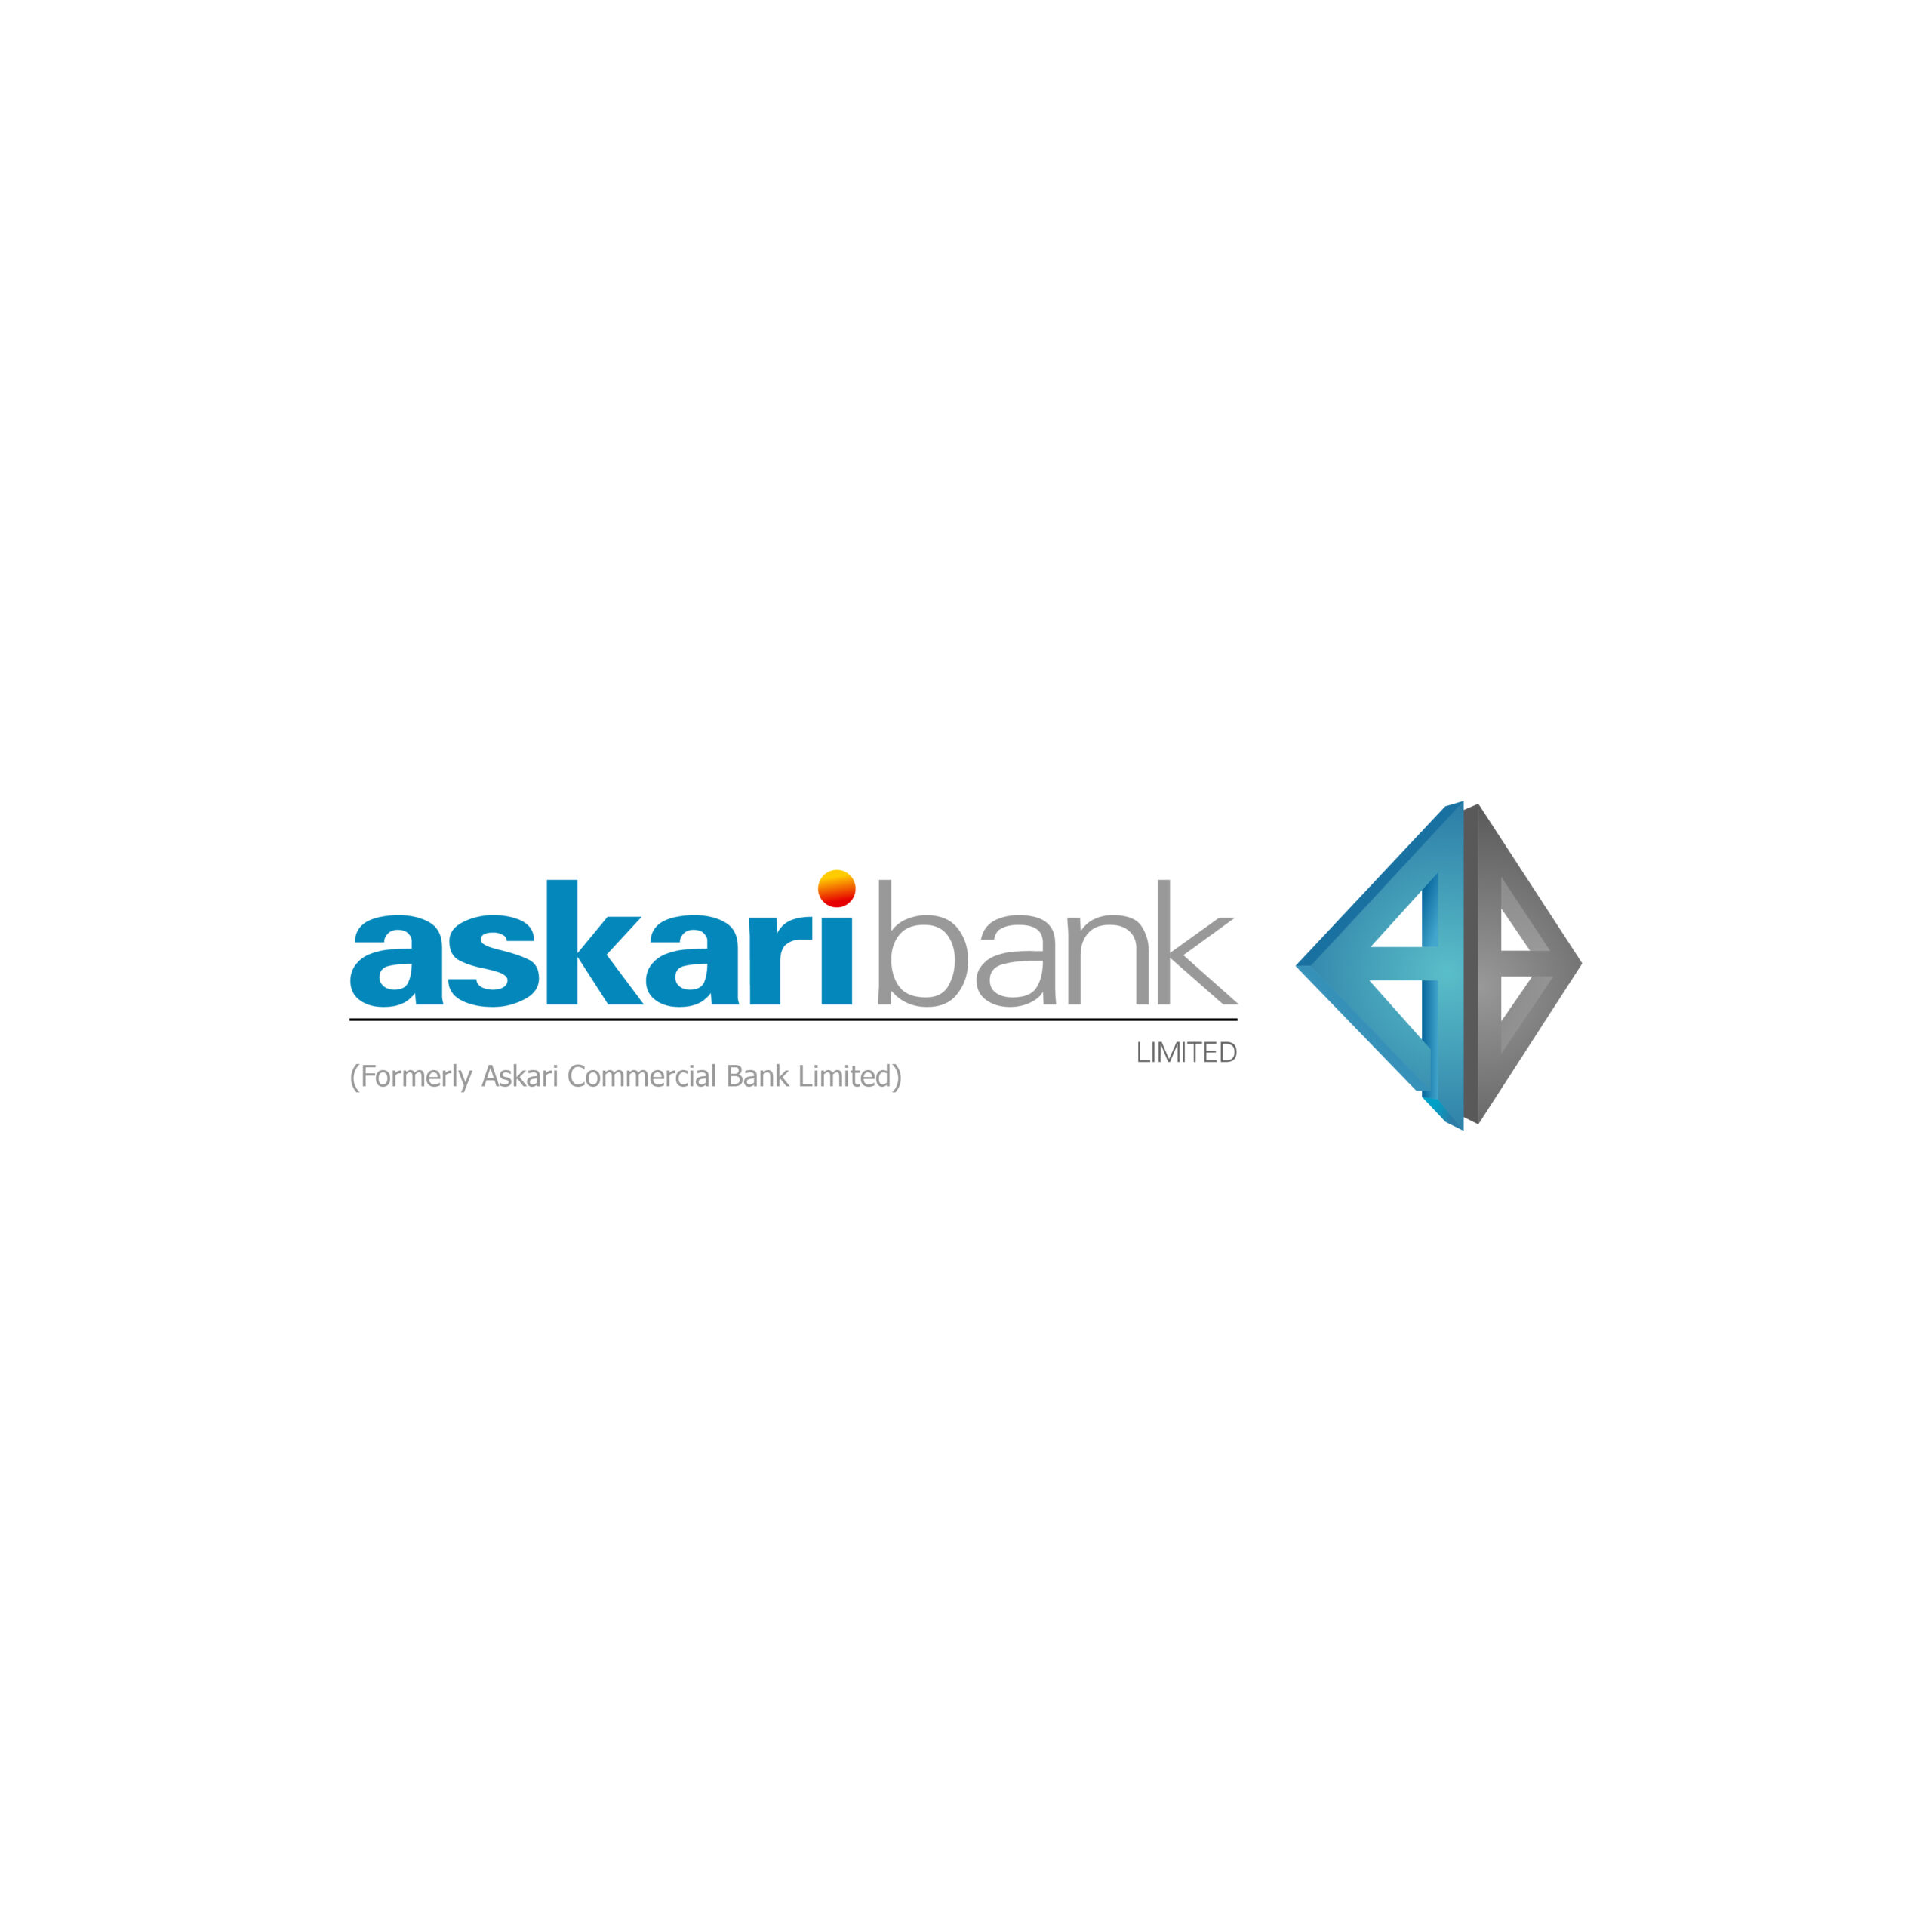 Askari bank logo vector